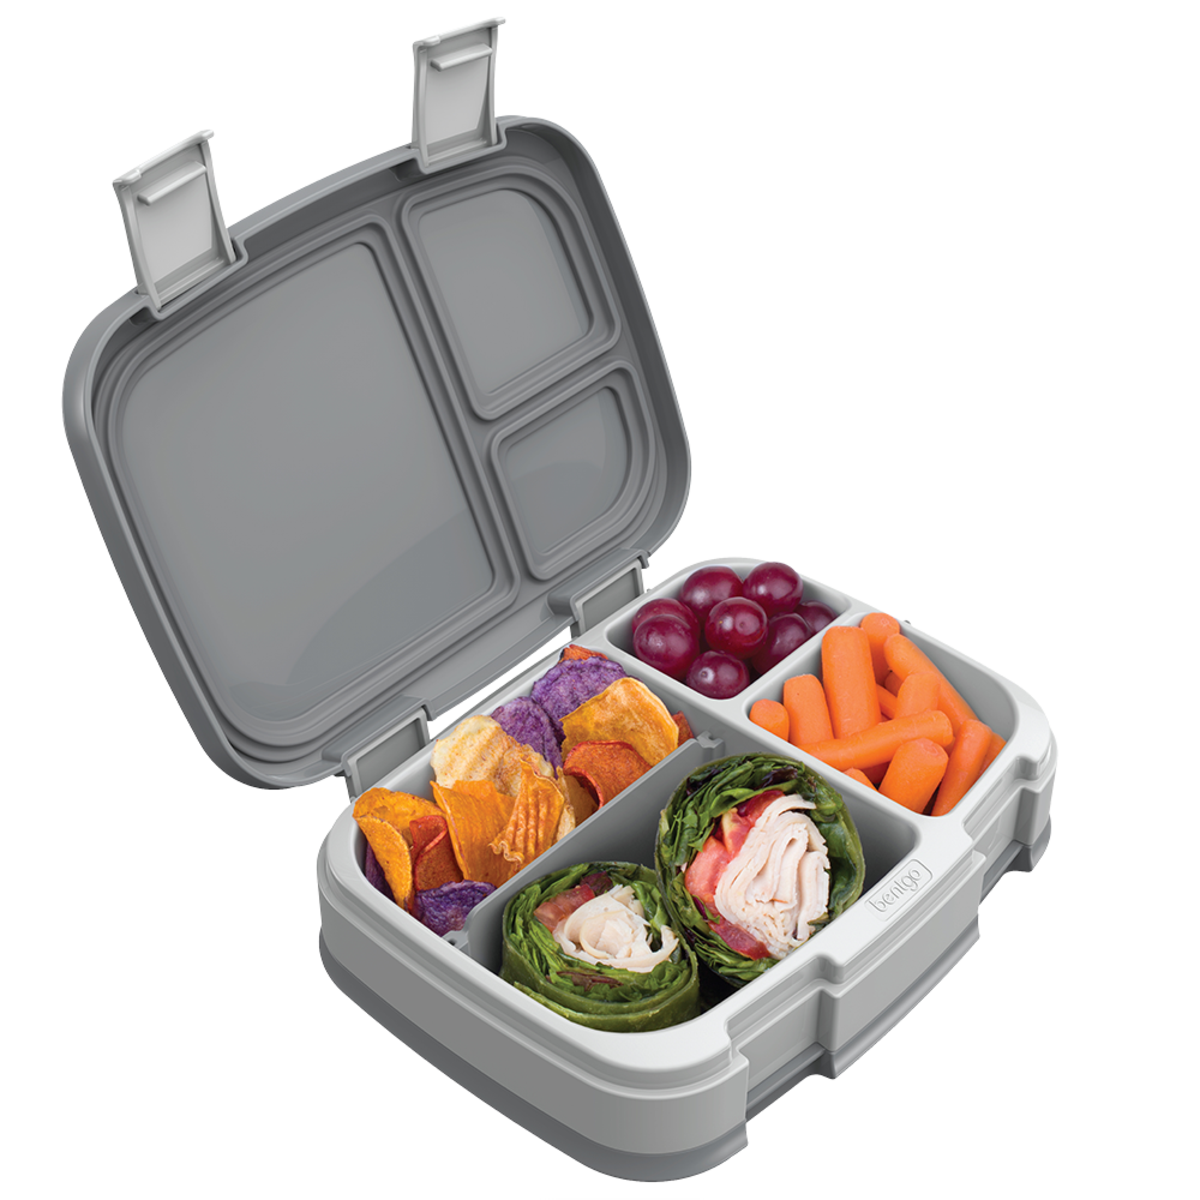 Bentgo Fresh Leak Proof Bento Lunch Box